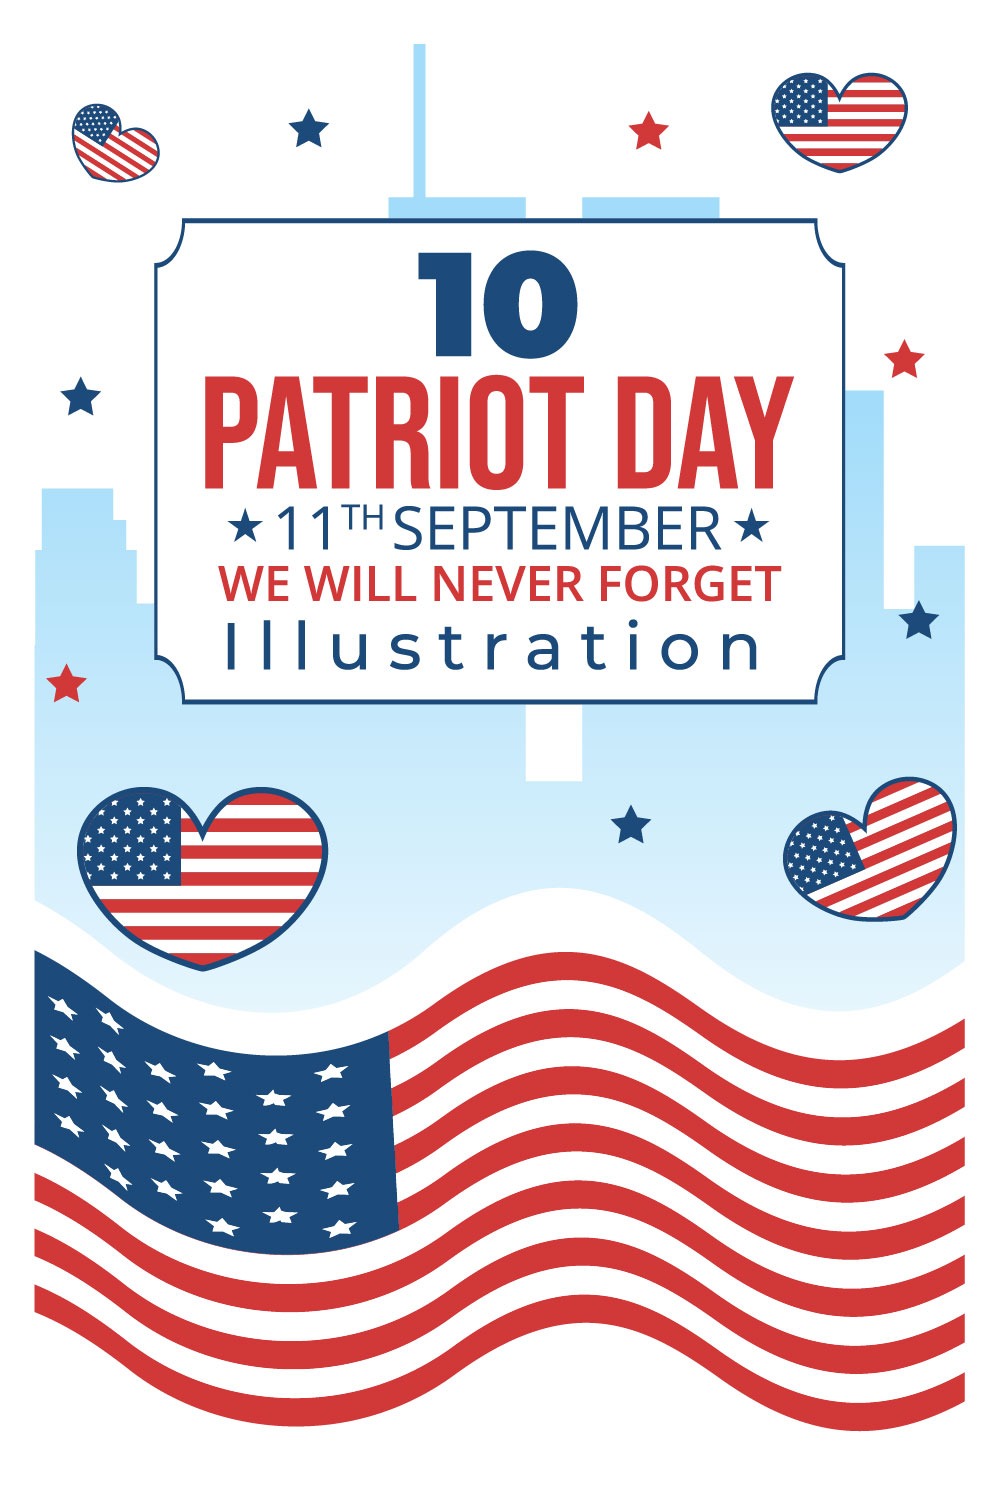 10 Patriot Day USA Celebration Illustration Pinterest Image.